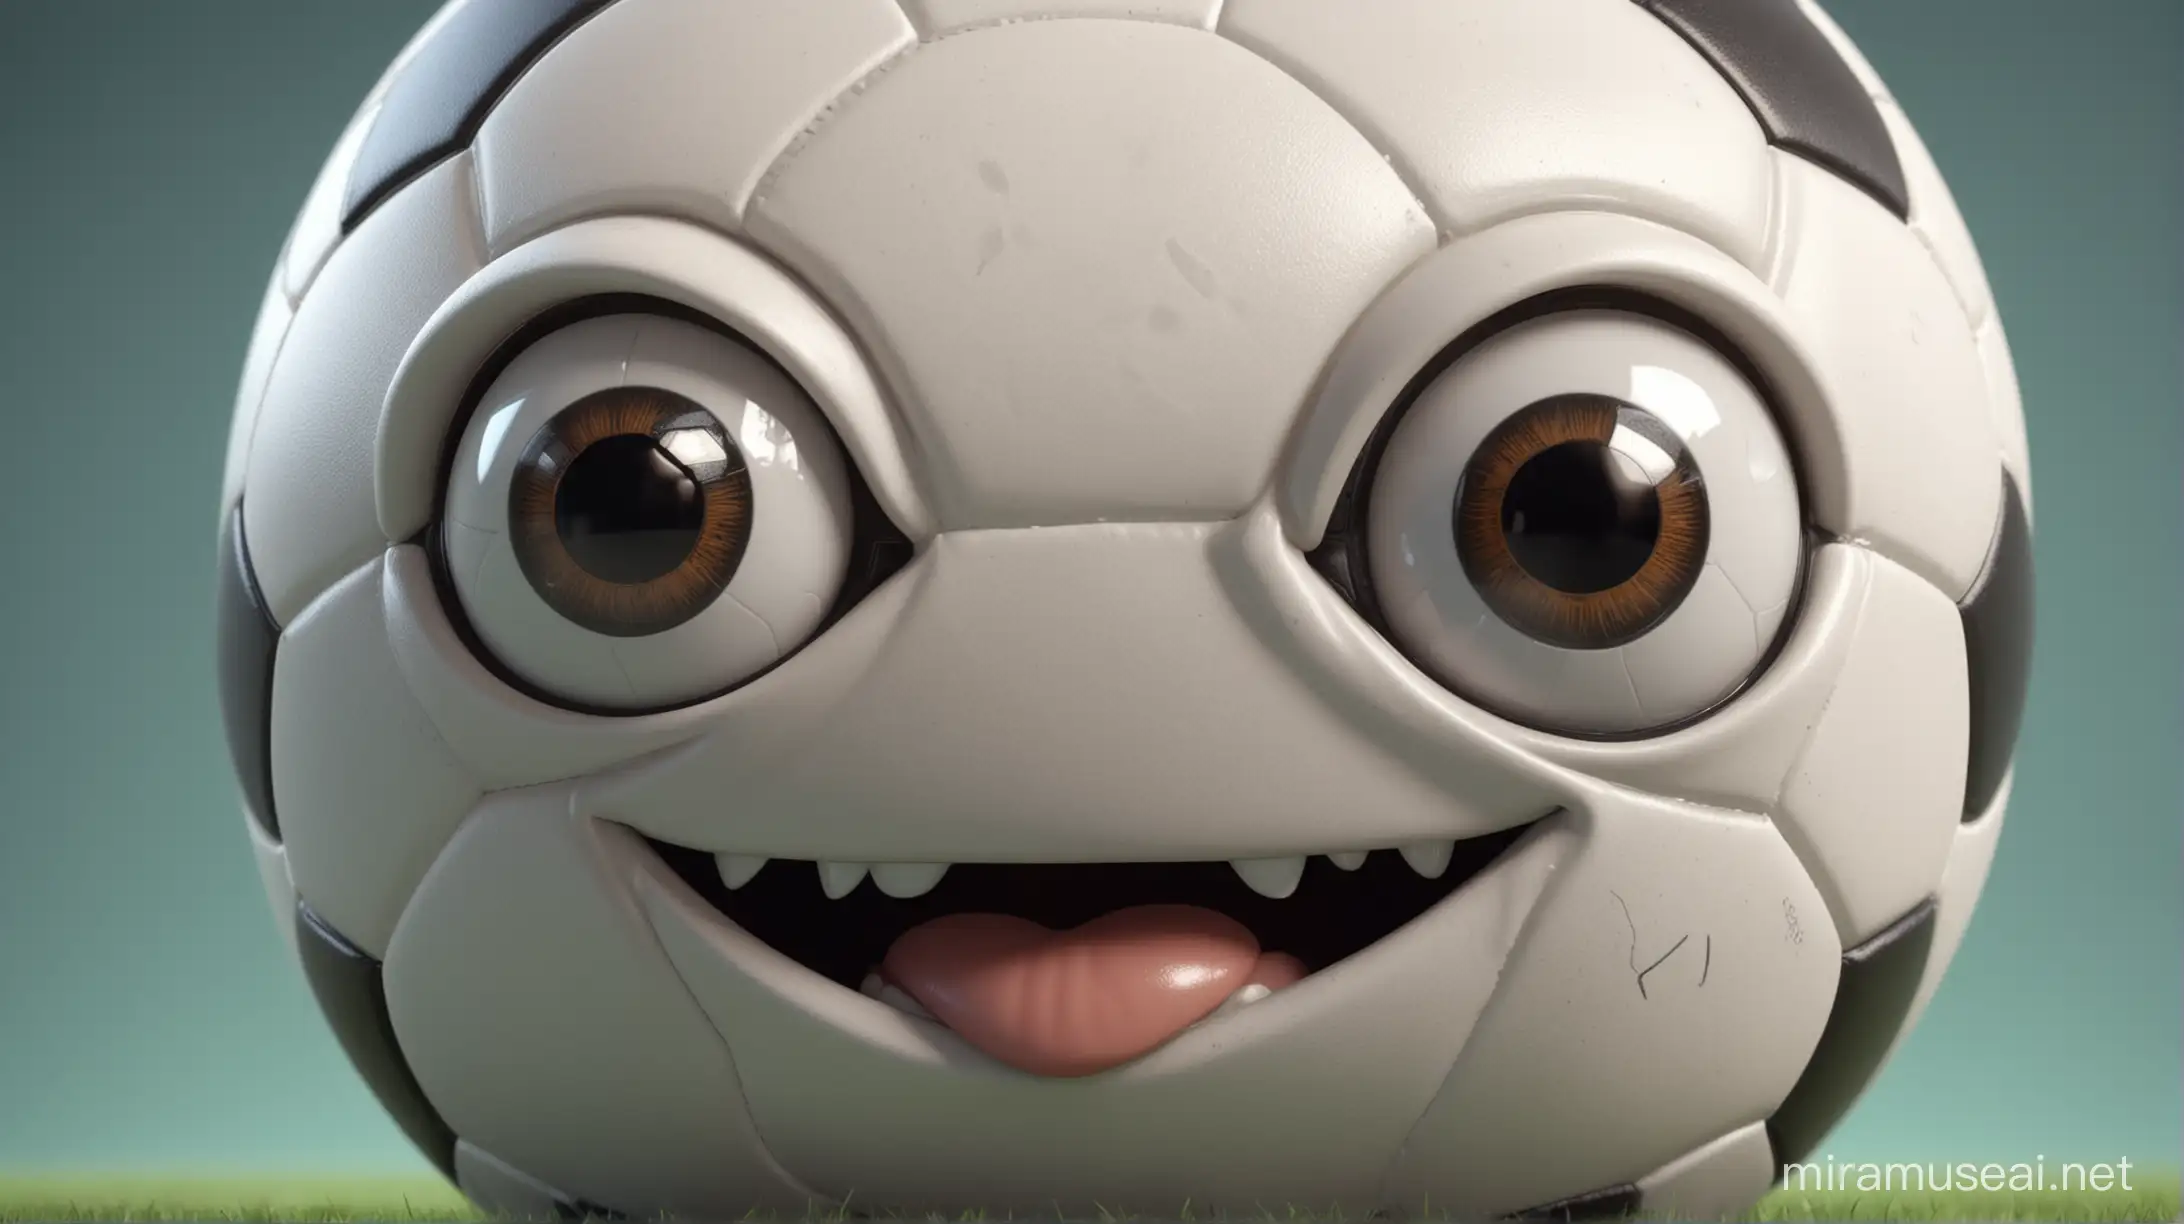 Cheerful Cartoon Soccer Ball with Joyful Expression